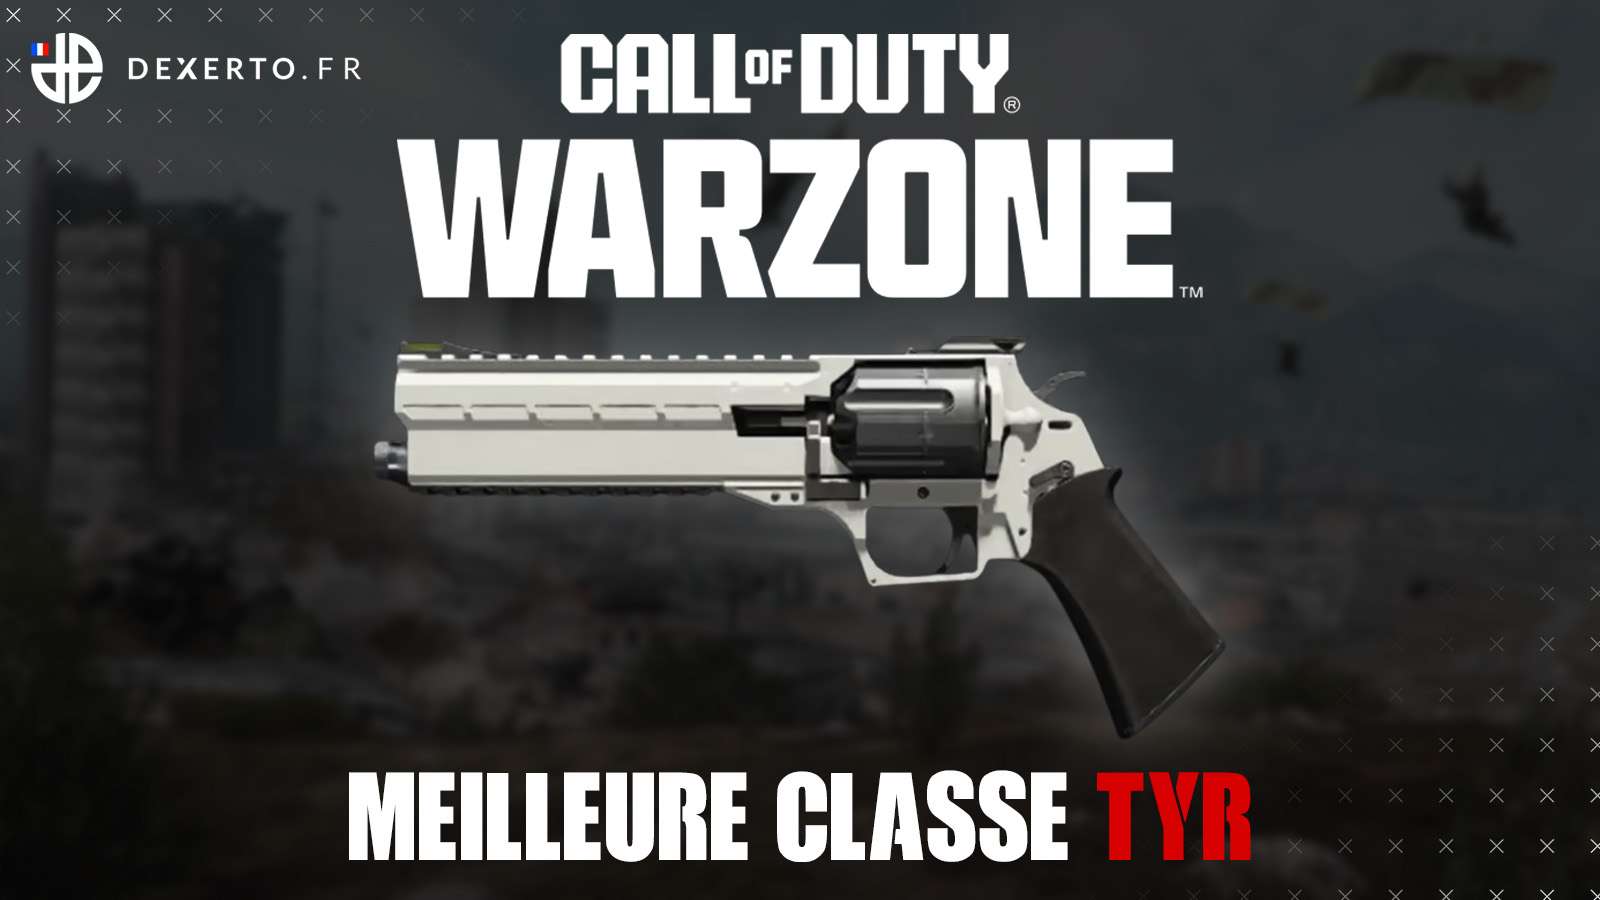 Meilleure classe du pistoler TYR dans Warzone